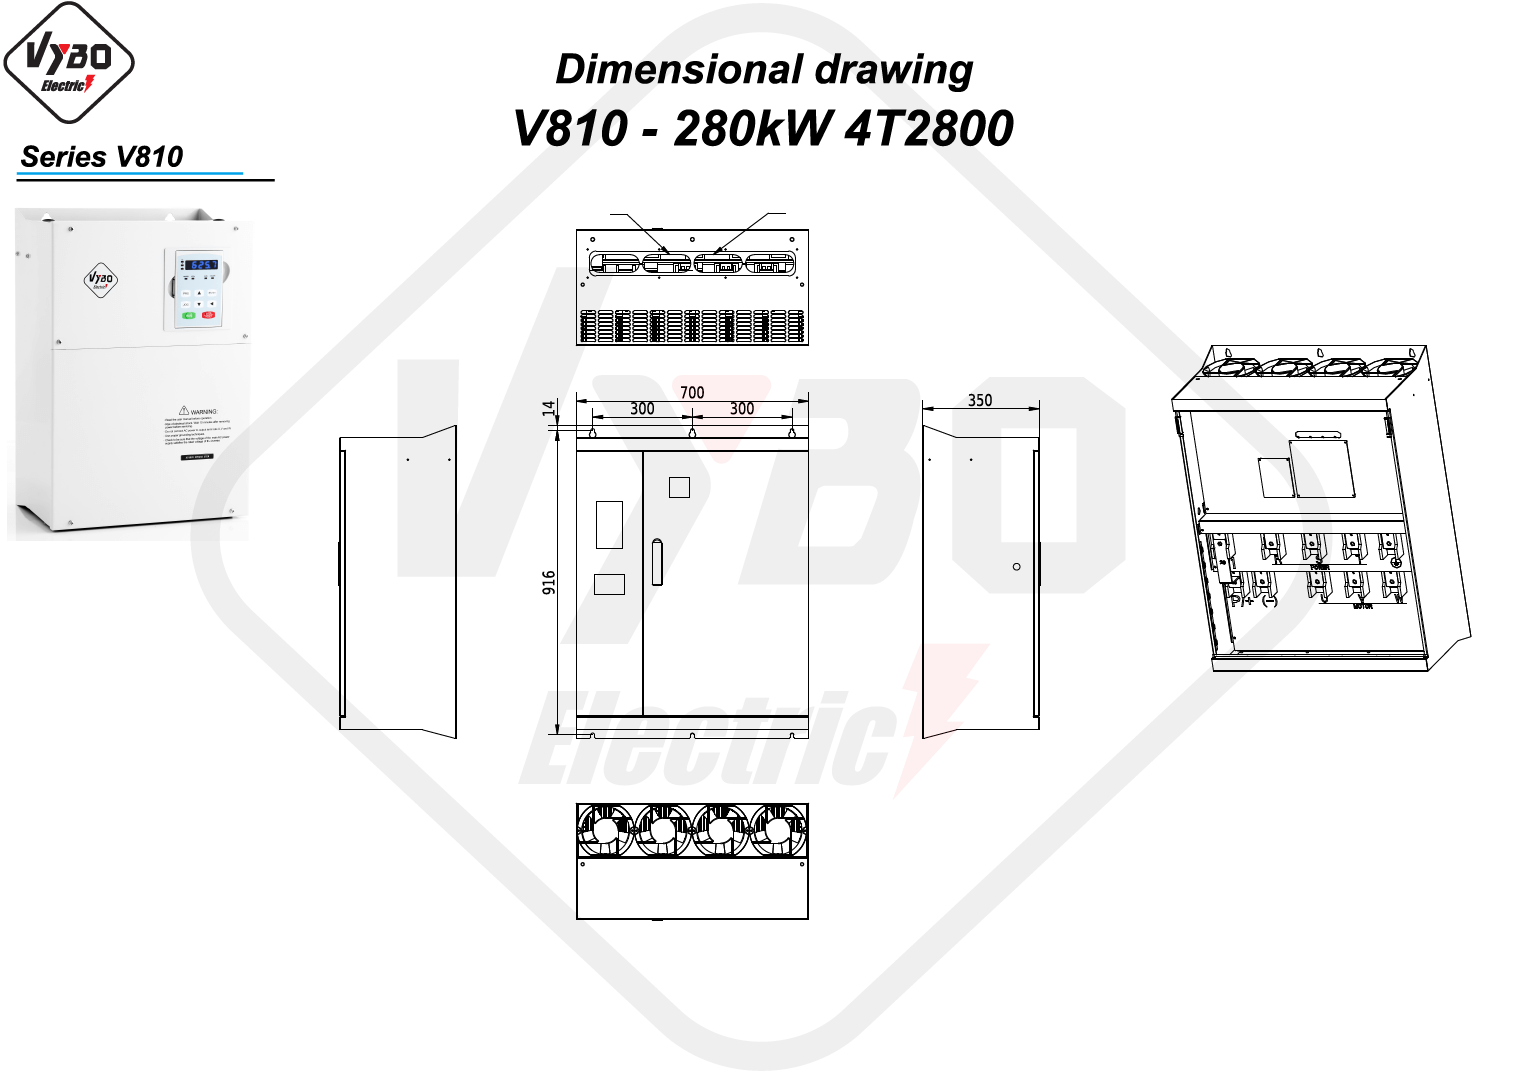 dimensional drawing V810 4T2800